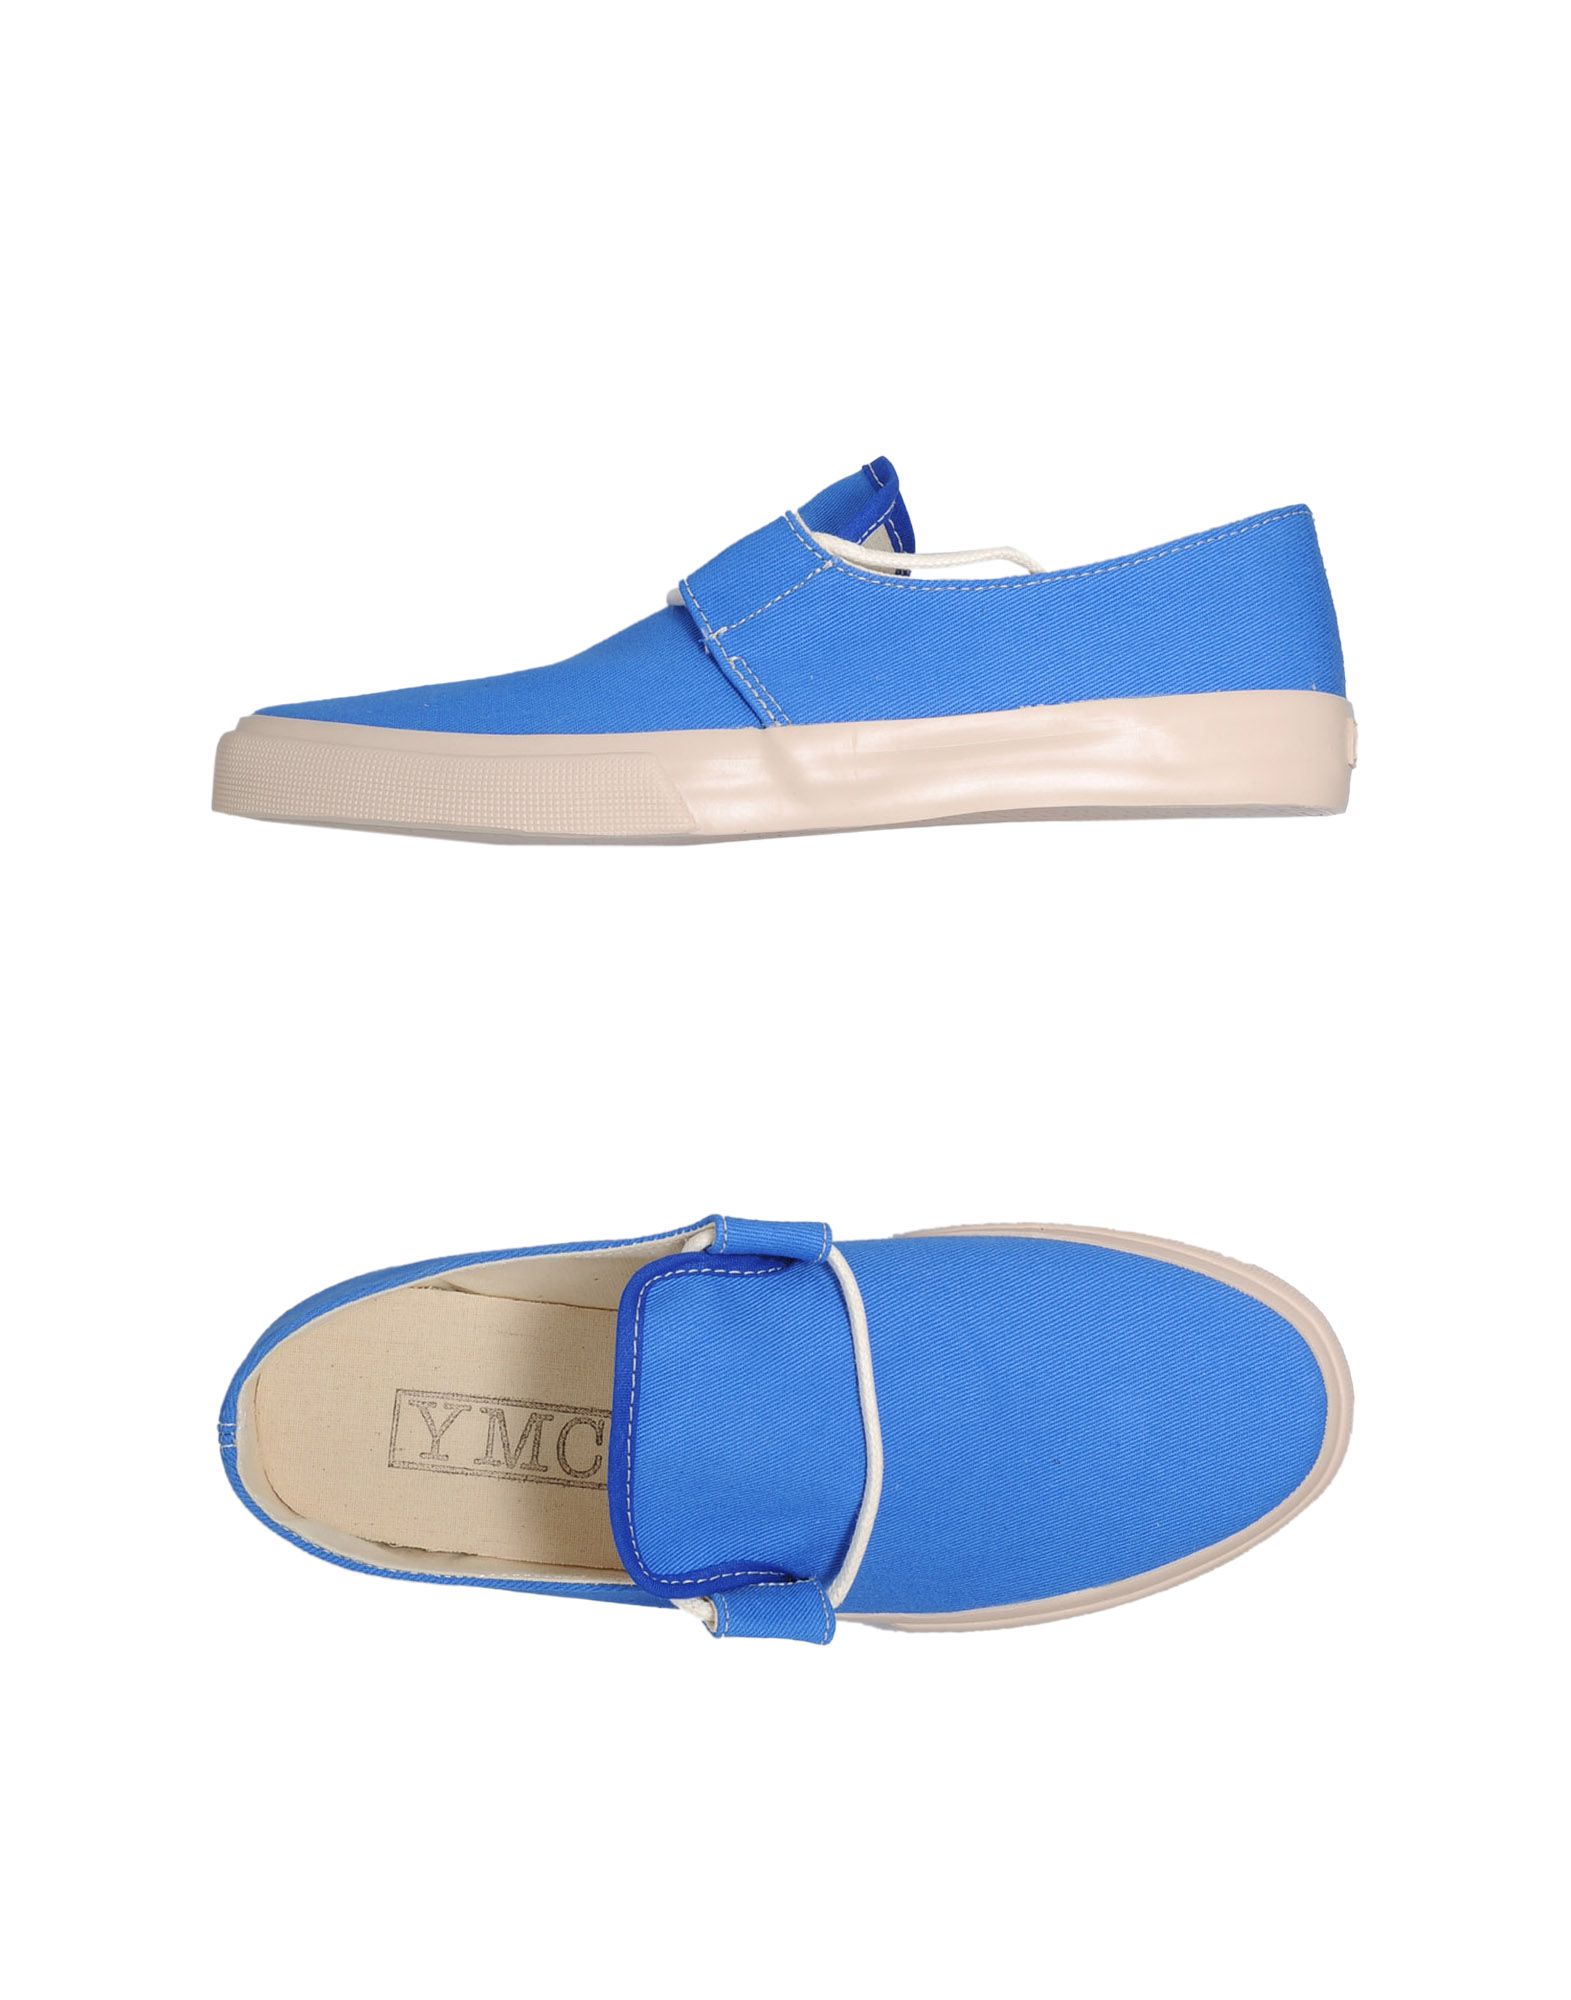 Foto Ymc You Must Create Sneakers Slip On Hombre Azul